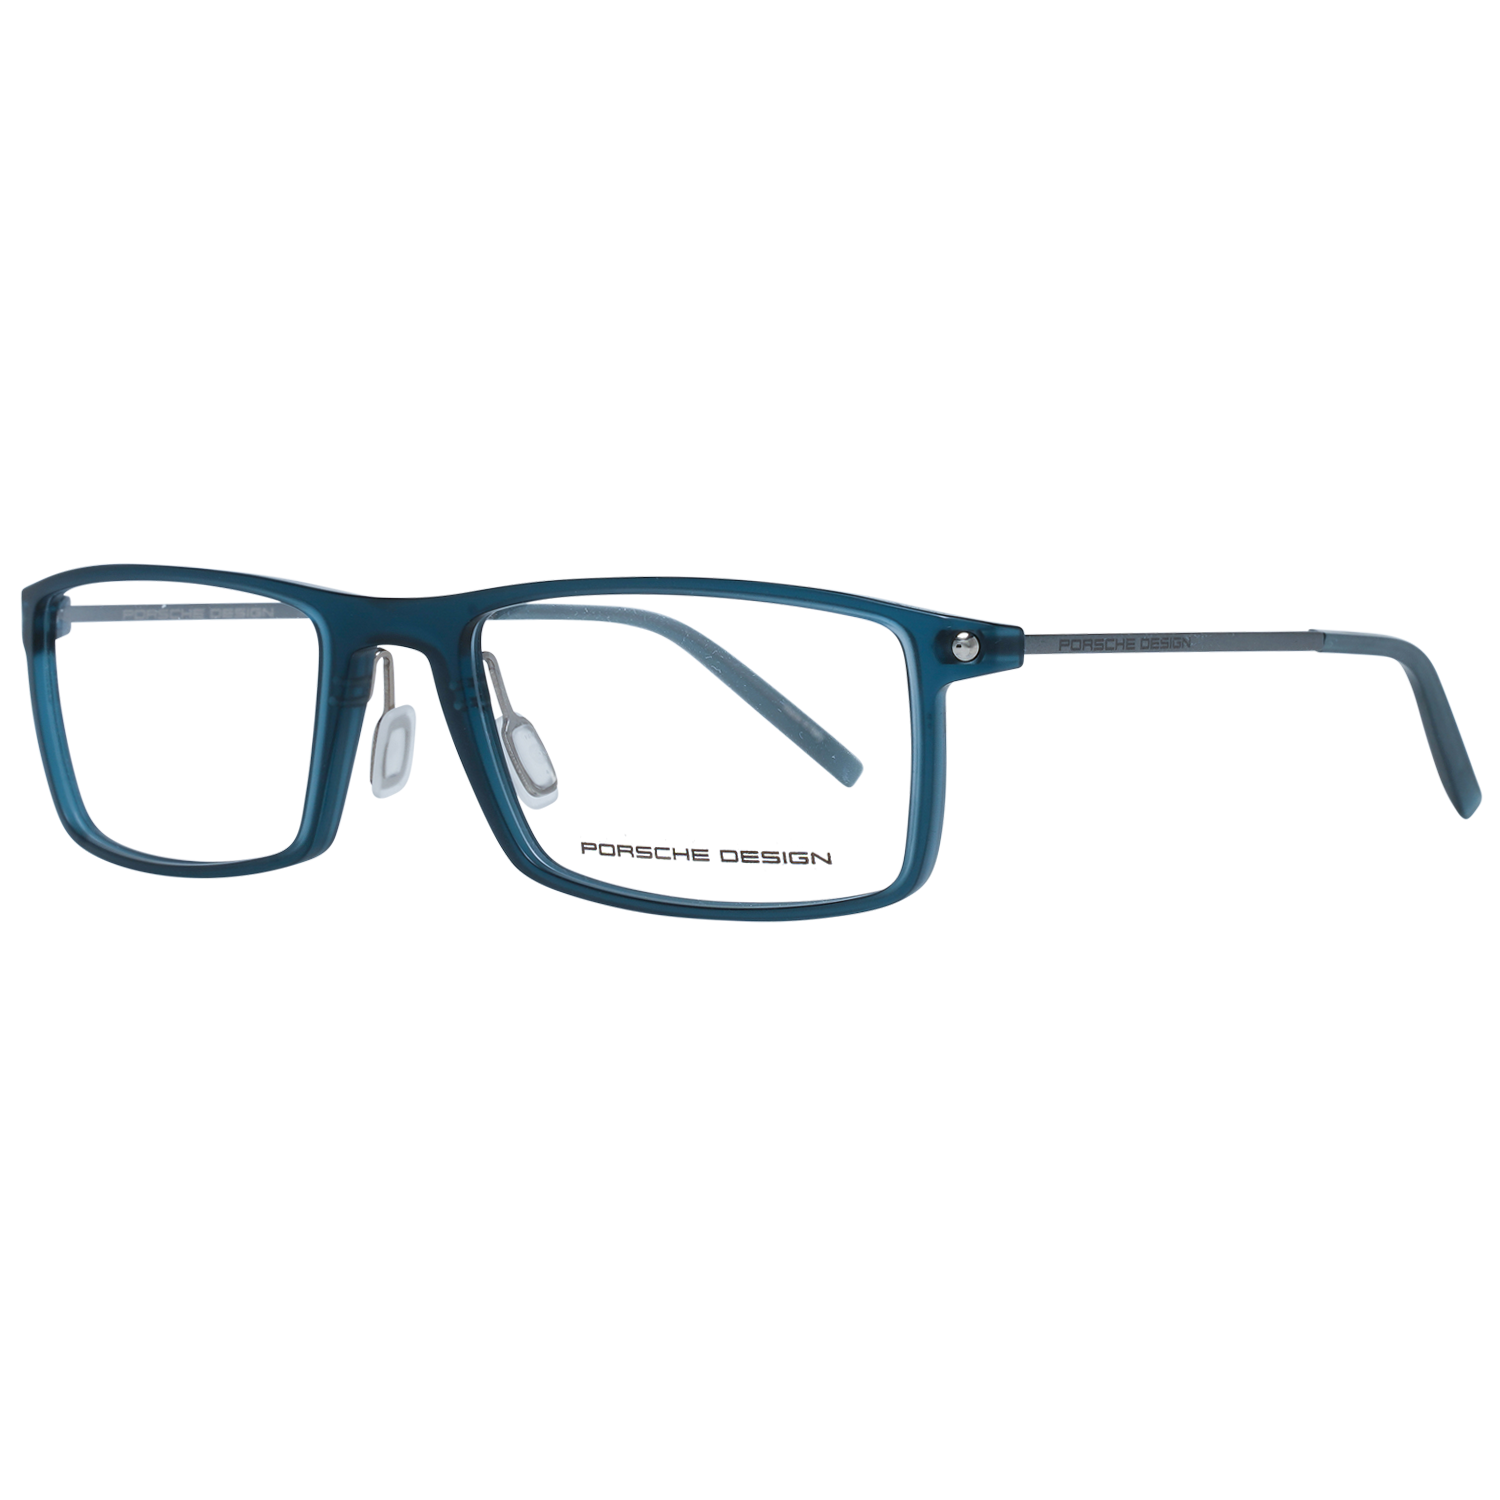 Porsche Design Eyeglasses Porsche Design Glasses Frames P8384 B 55 Eyeglasses Eyewear UK USA Australia 